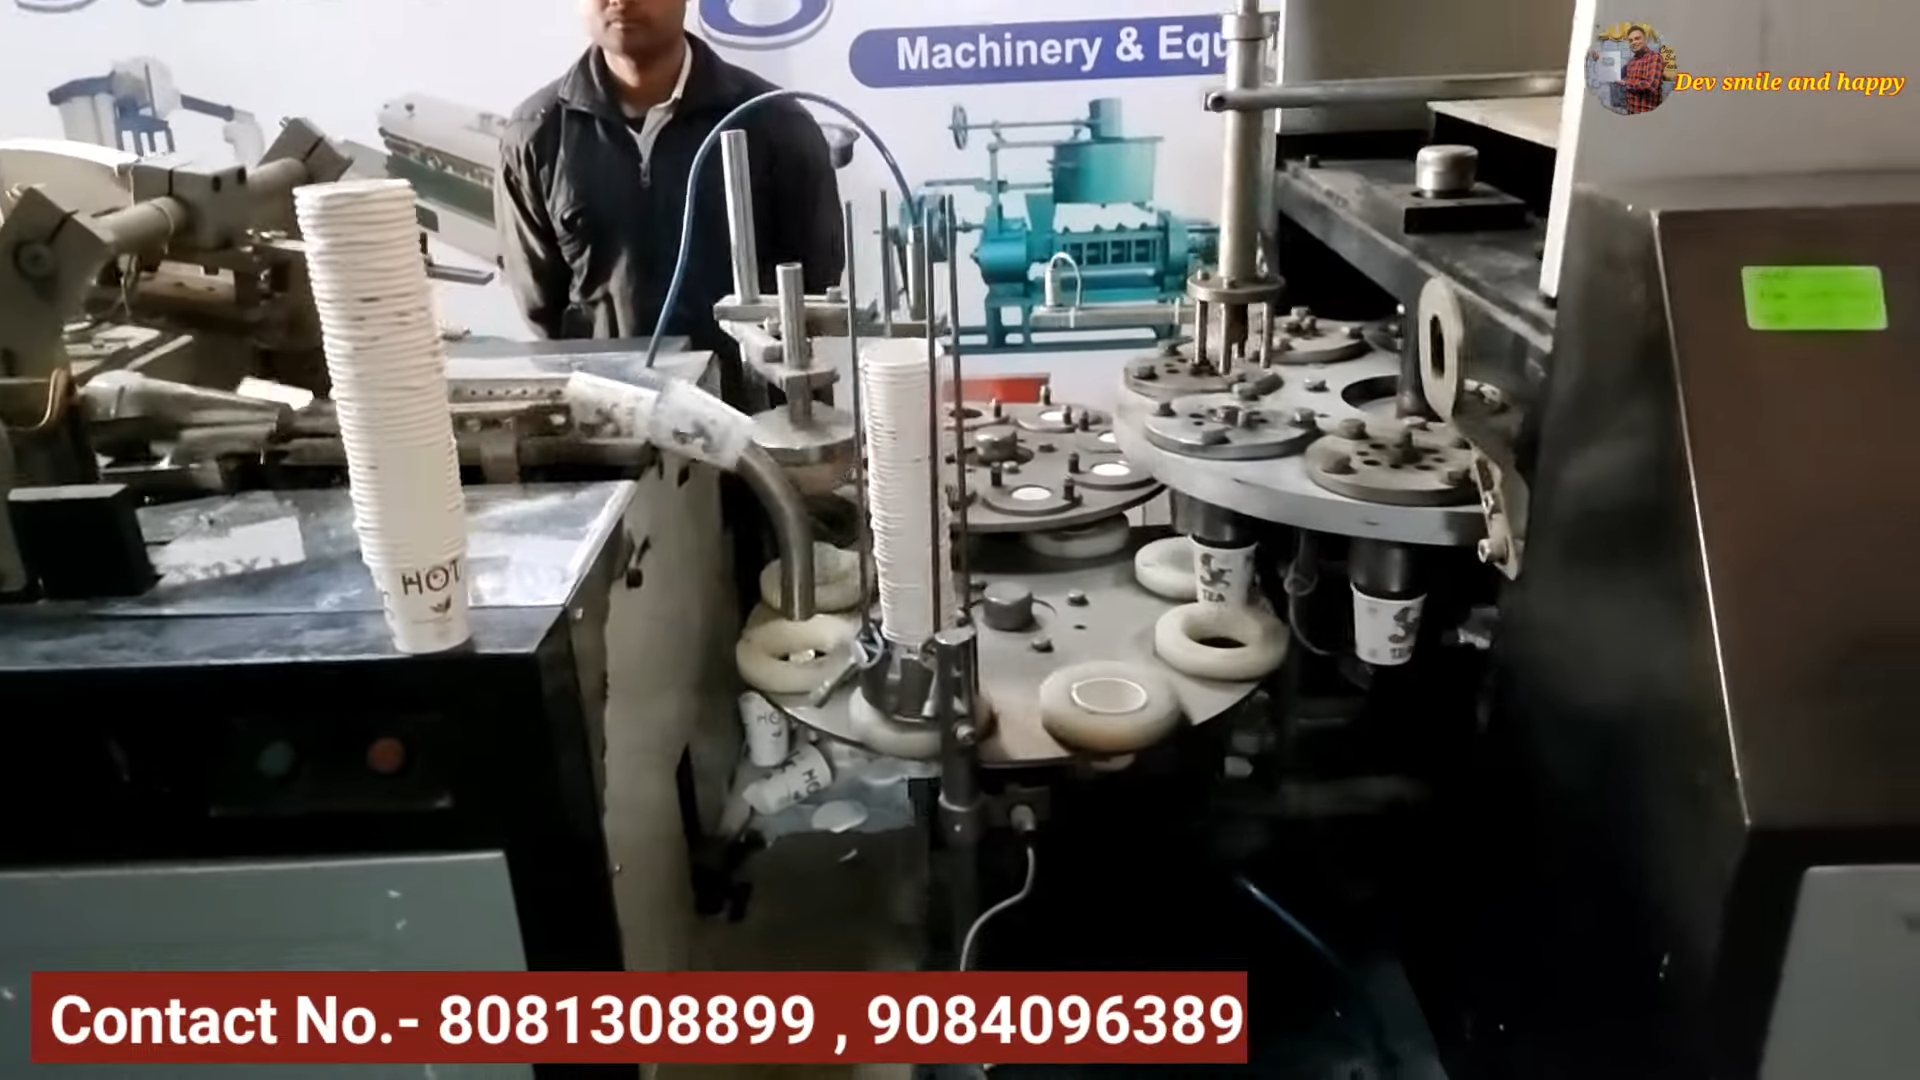 FULLY AUTOMATIC PAPER CUP MAKING MACHINE urgent sale in Bihar